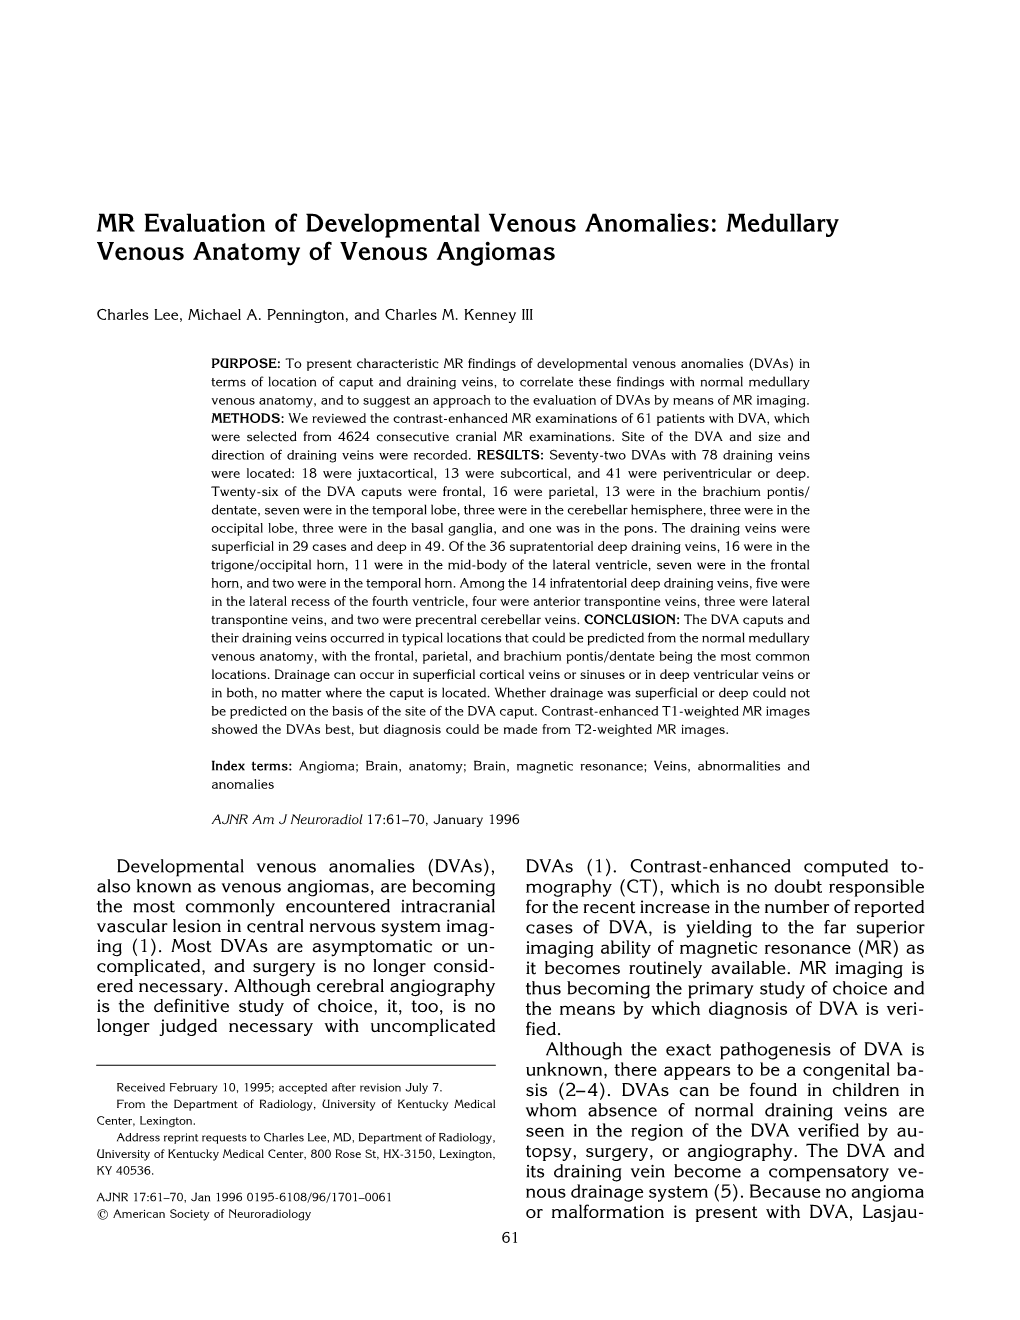 MR Evaluation of Developmental Venous Anomalies: Medullary Venous Anatomy of Venous Angiomas